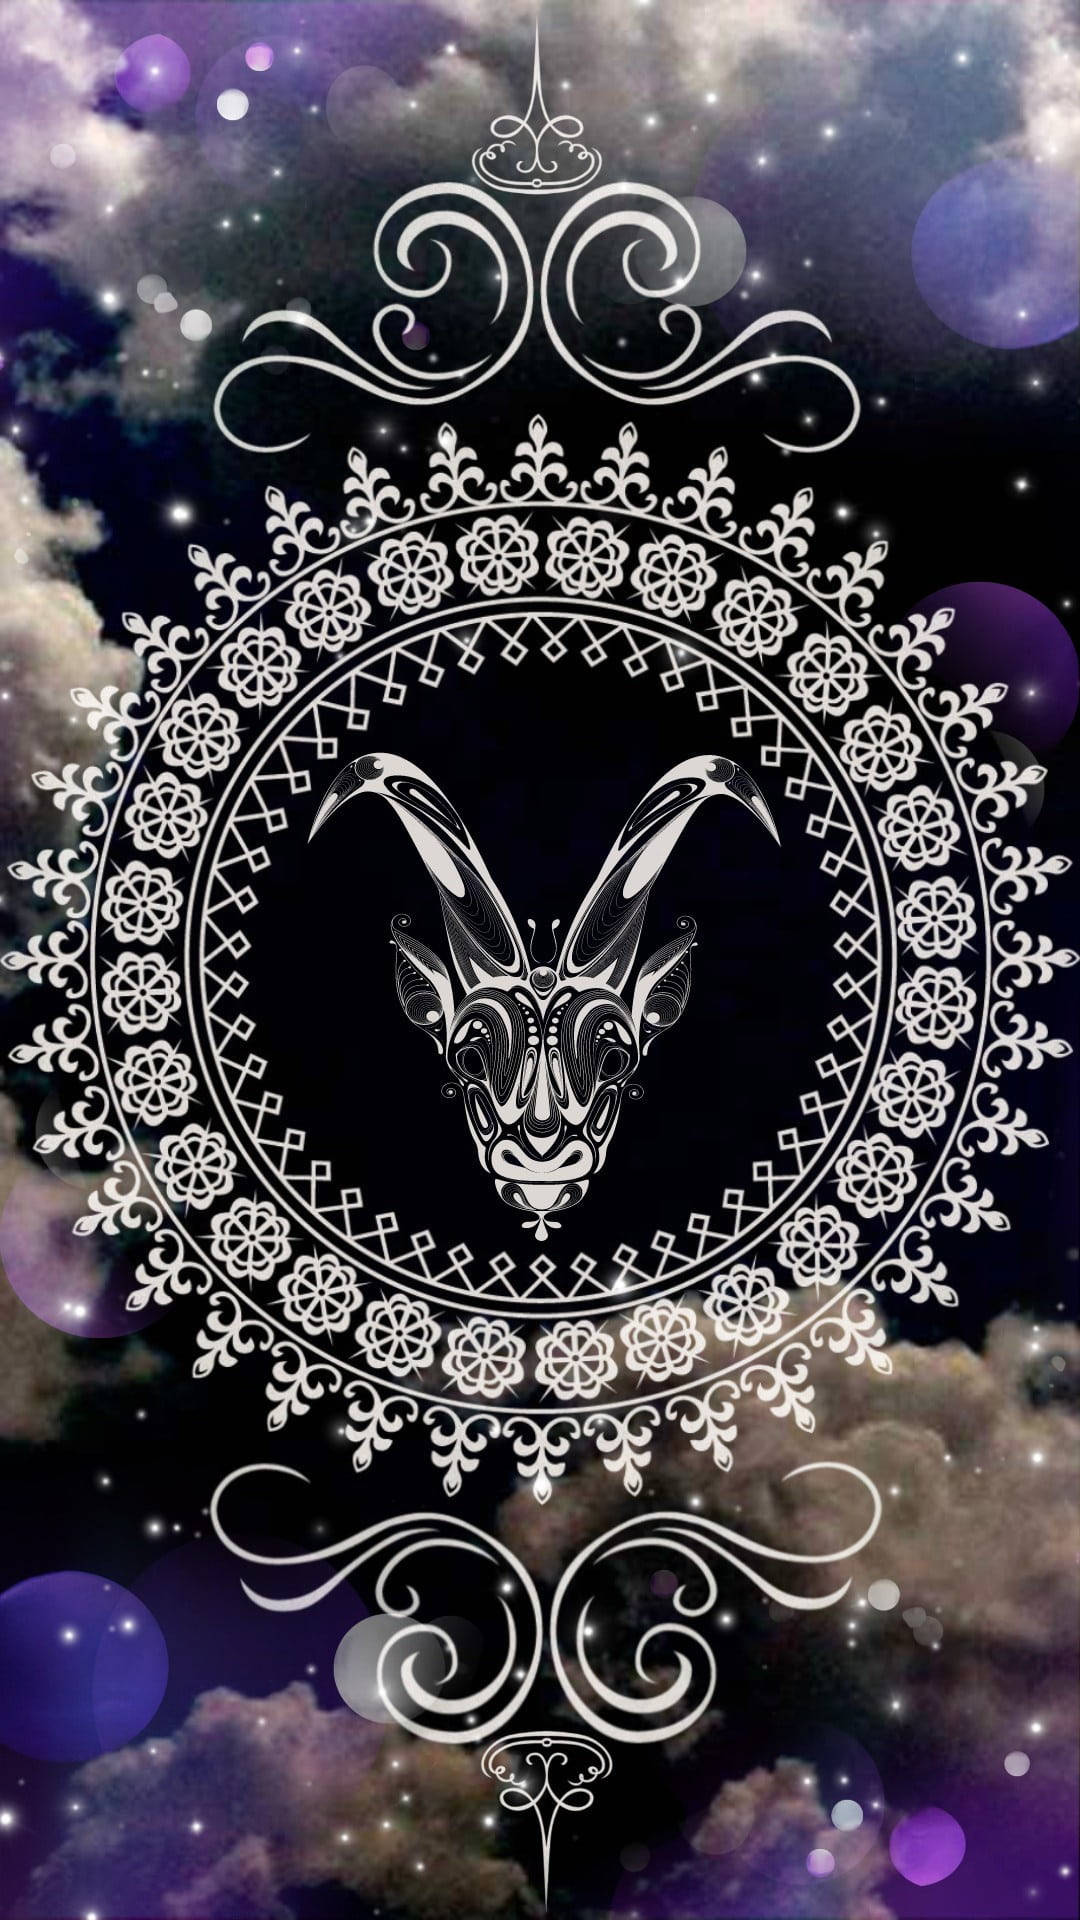 Caption: Artistic Capricorn Zodiac Mandala Design Wallpaper